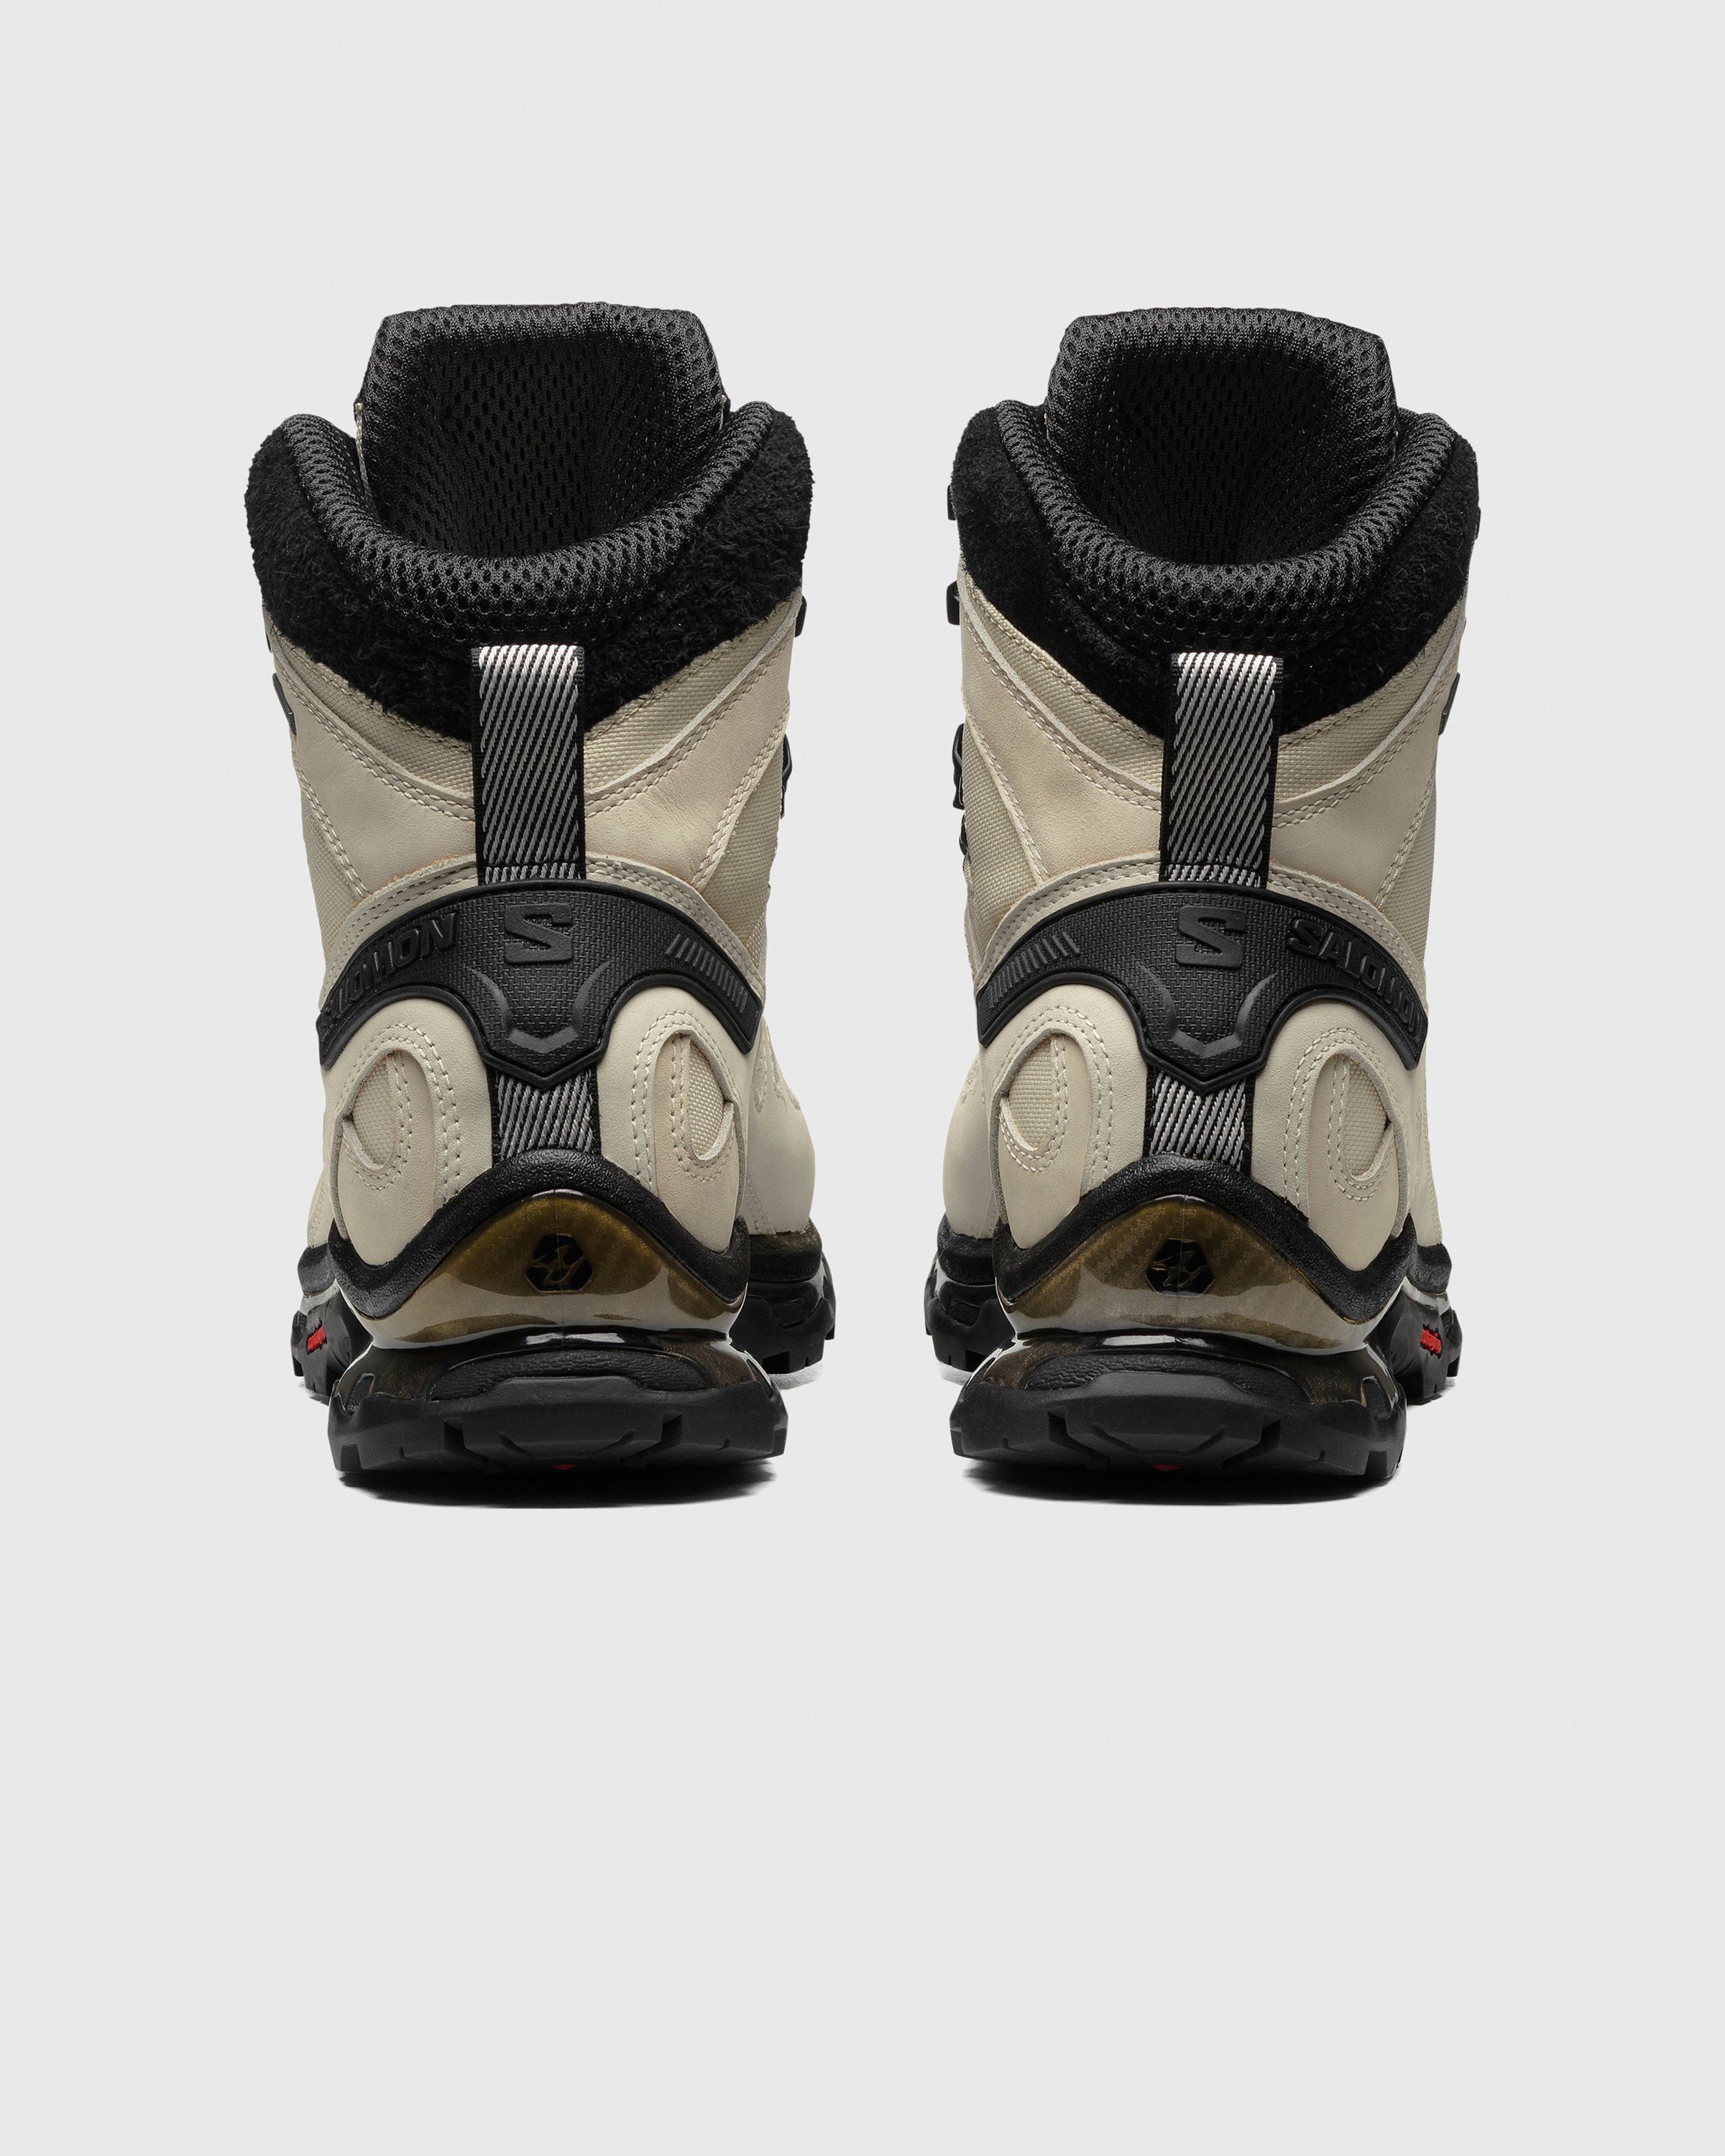 Salomon - Quest 4D GTX Advanced Bleached Sand/Black/Vanilla Ice - Footwear - Multi - Image 3